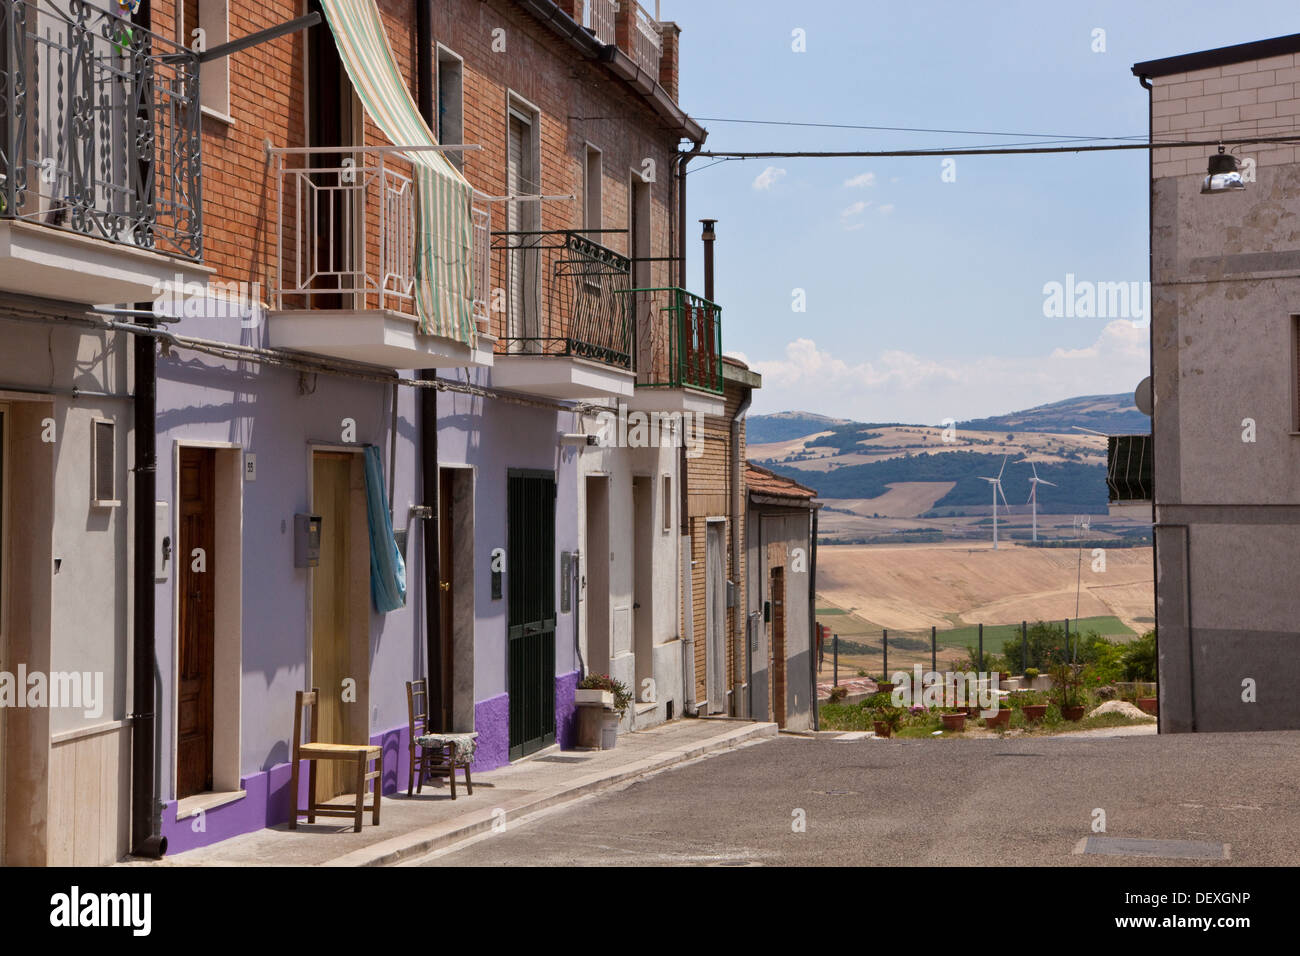 Violeta casa pintada en una calle italiana en Puglia, Italia Foto de stock